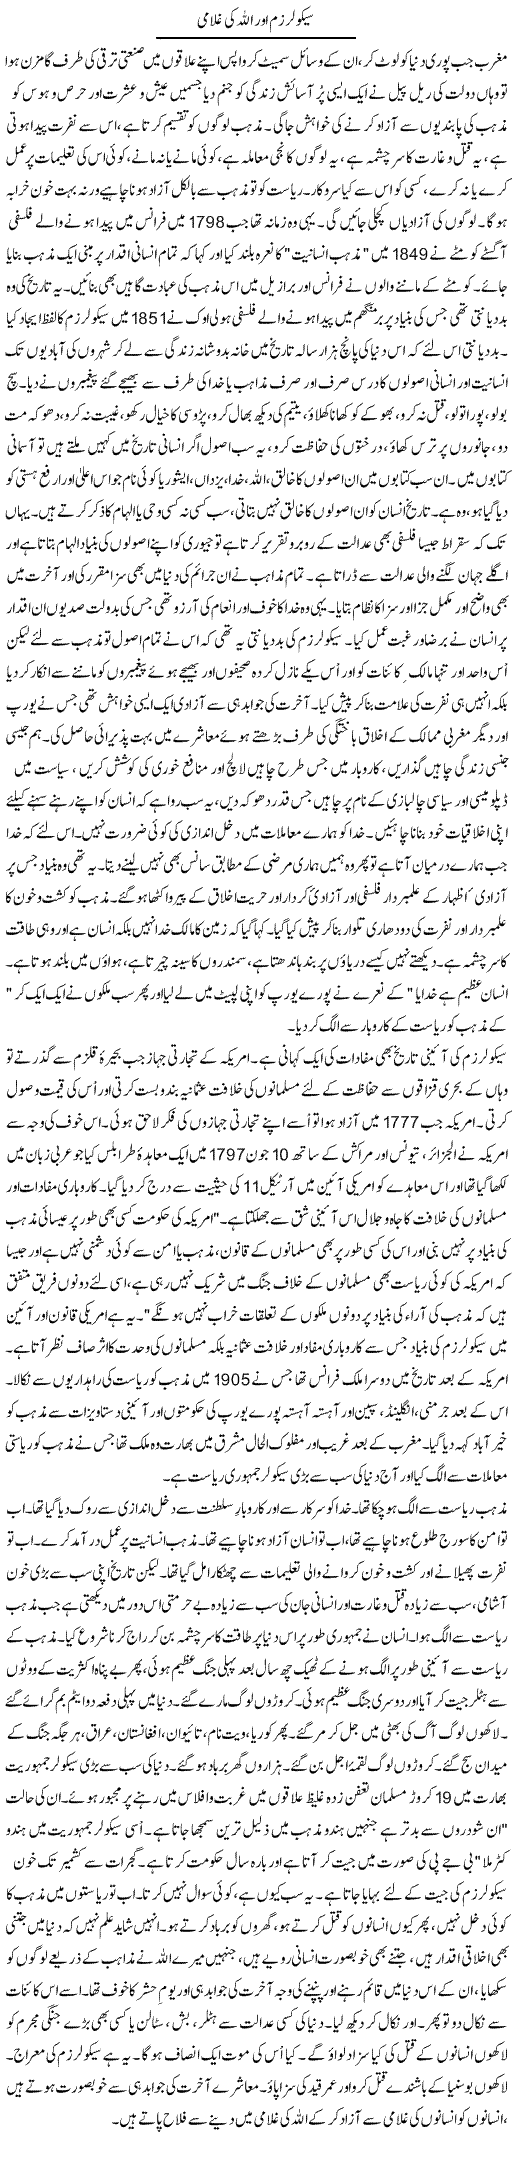 Secularism Express Column Orya Maqbool 22 December 2010